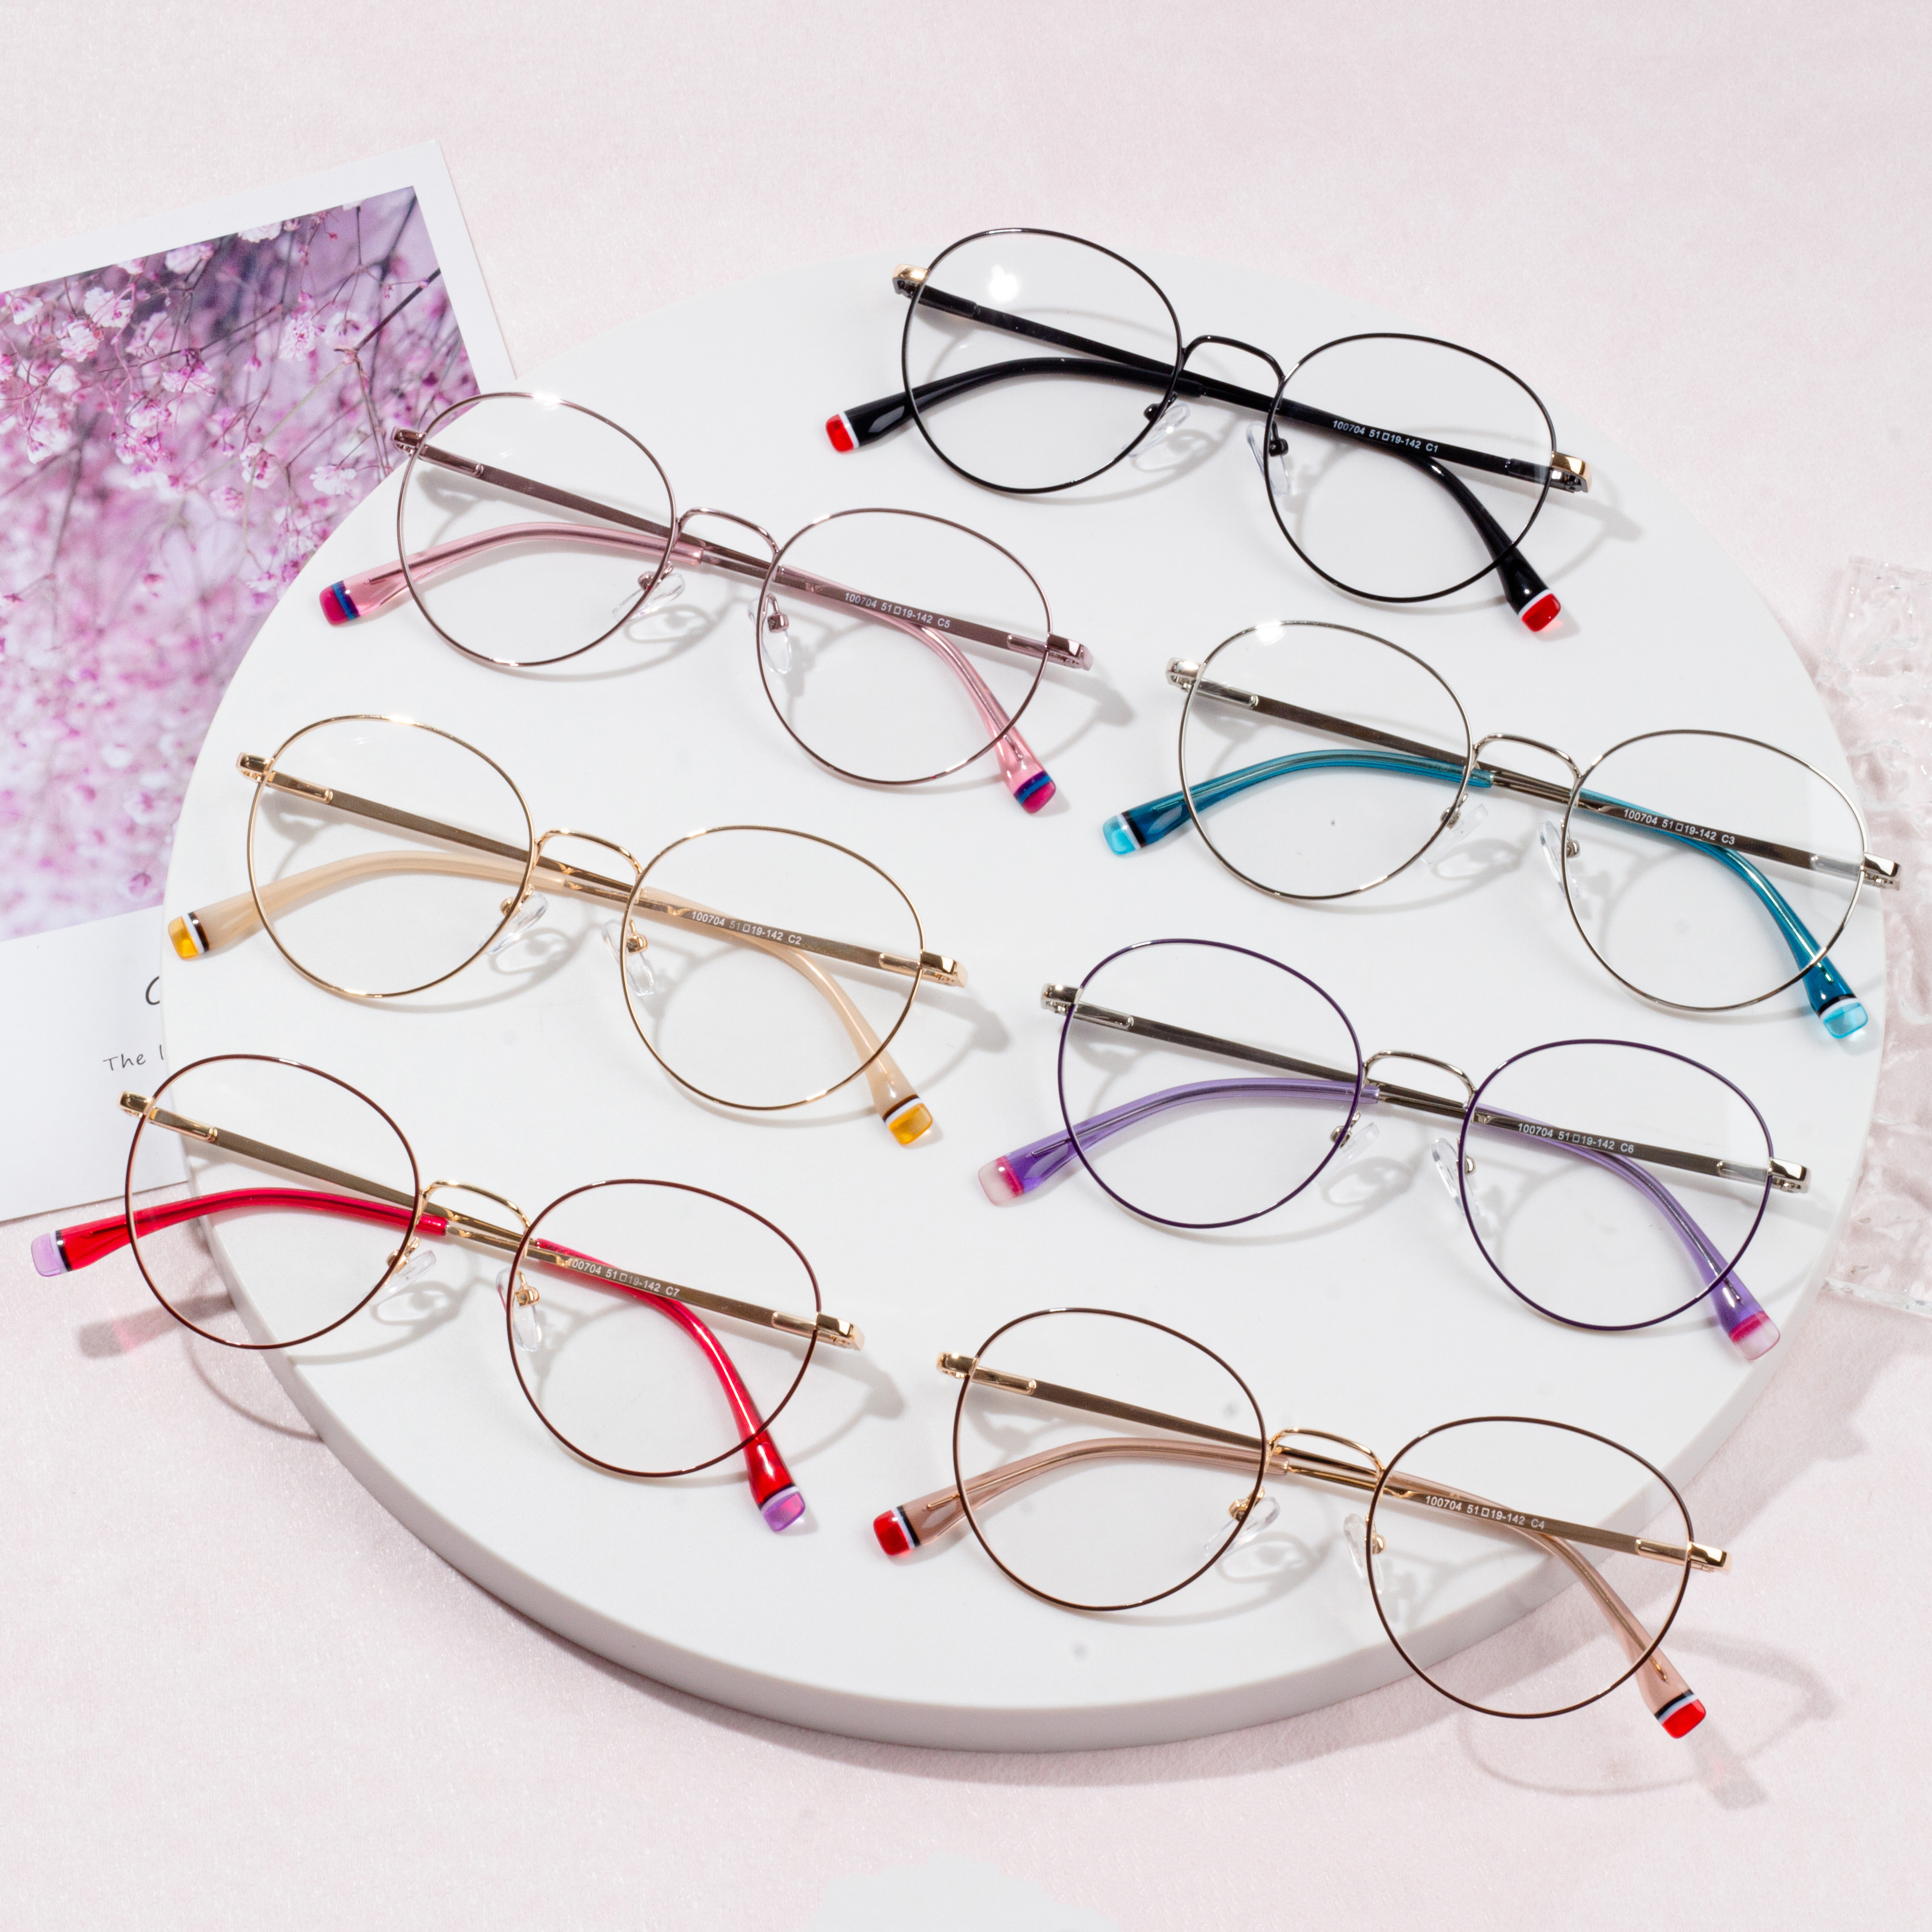 Fabriksförsäljning olika glasögon